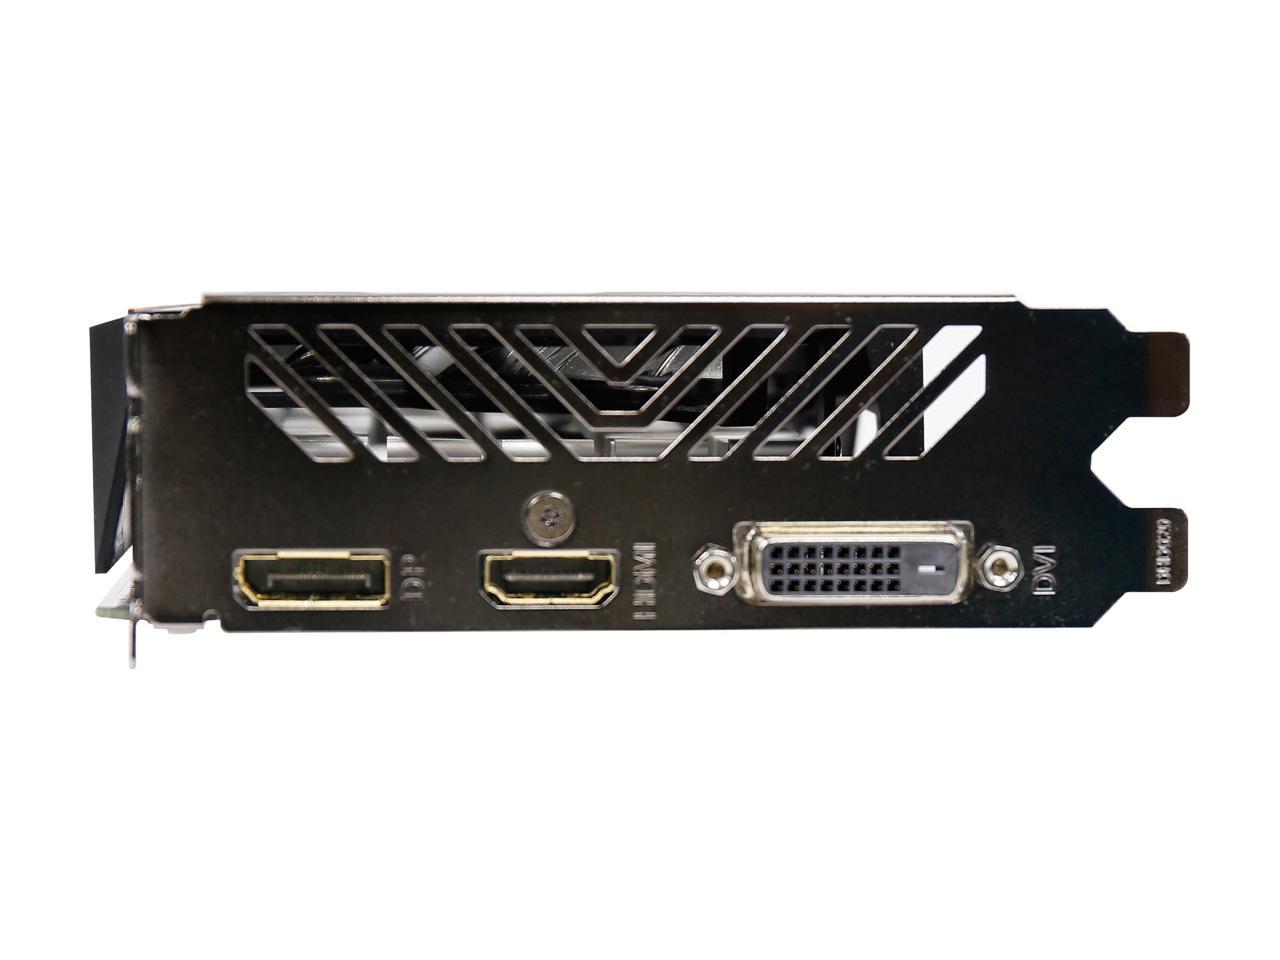 GIGABYTE GeForce GTX 1050 Ti DirectX 12 GV-N105TOC-4GD 4GB 128-Bit GDDR5 PCI Express 3.0 x16 ATX Video Cards